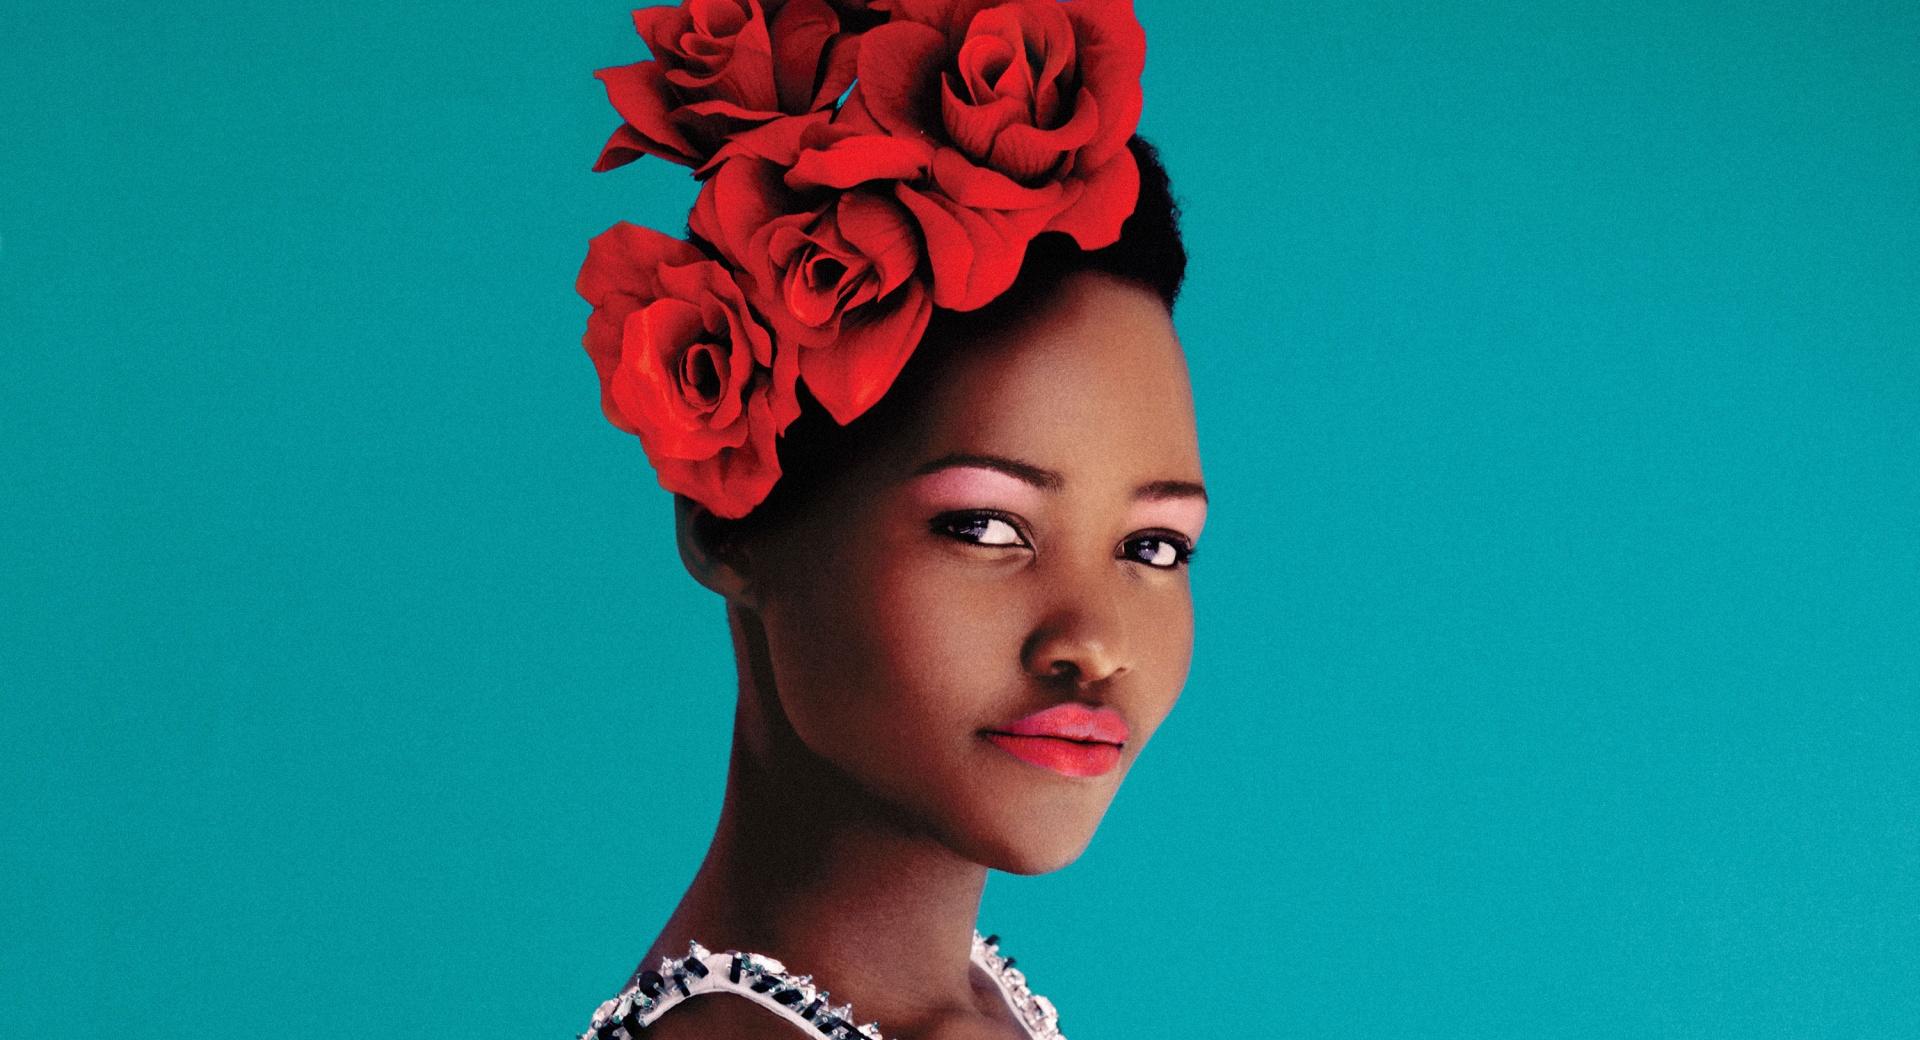 Lupita Nyongo Portrait wallpapers HD quality